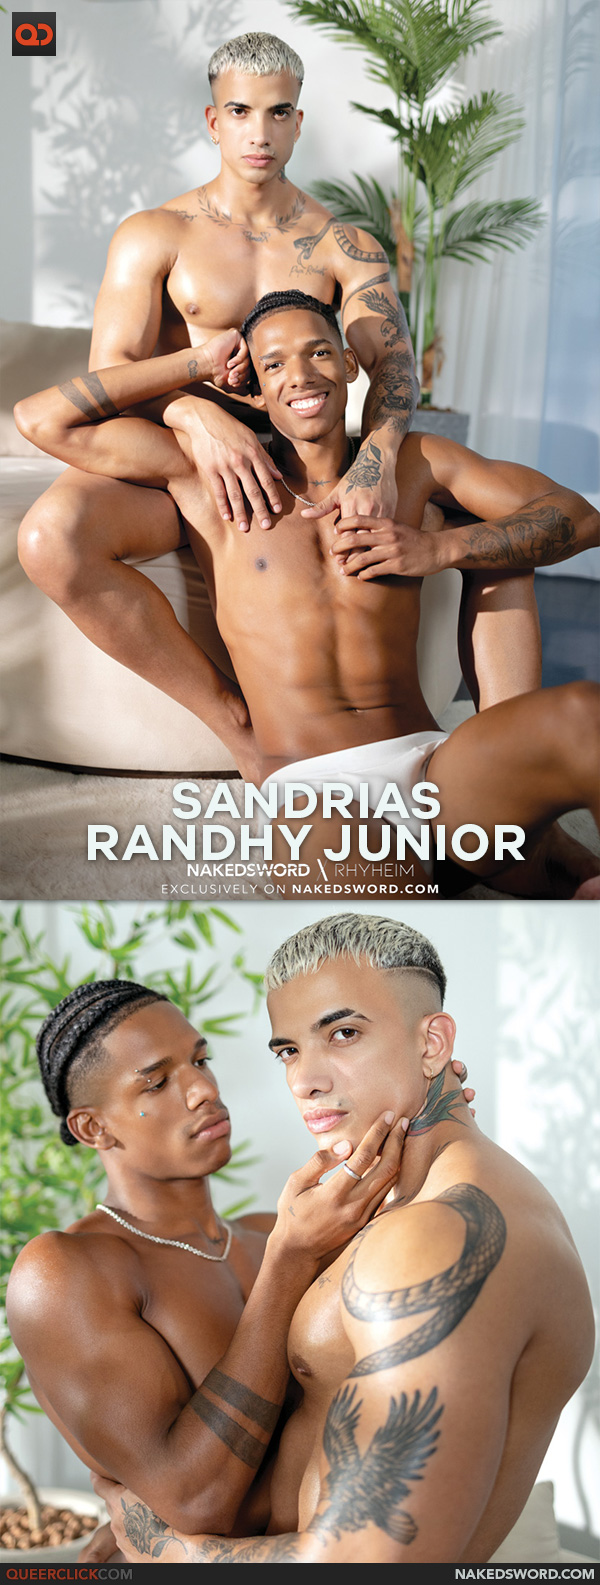 Naked Sword X Rhyheim: Randhy Junior And Sandrias